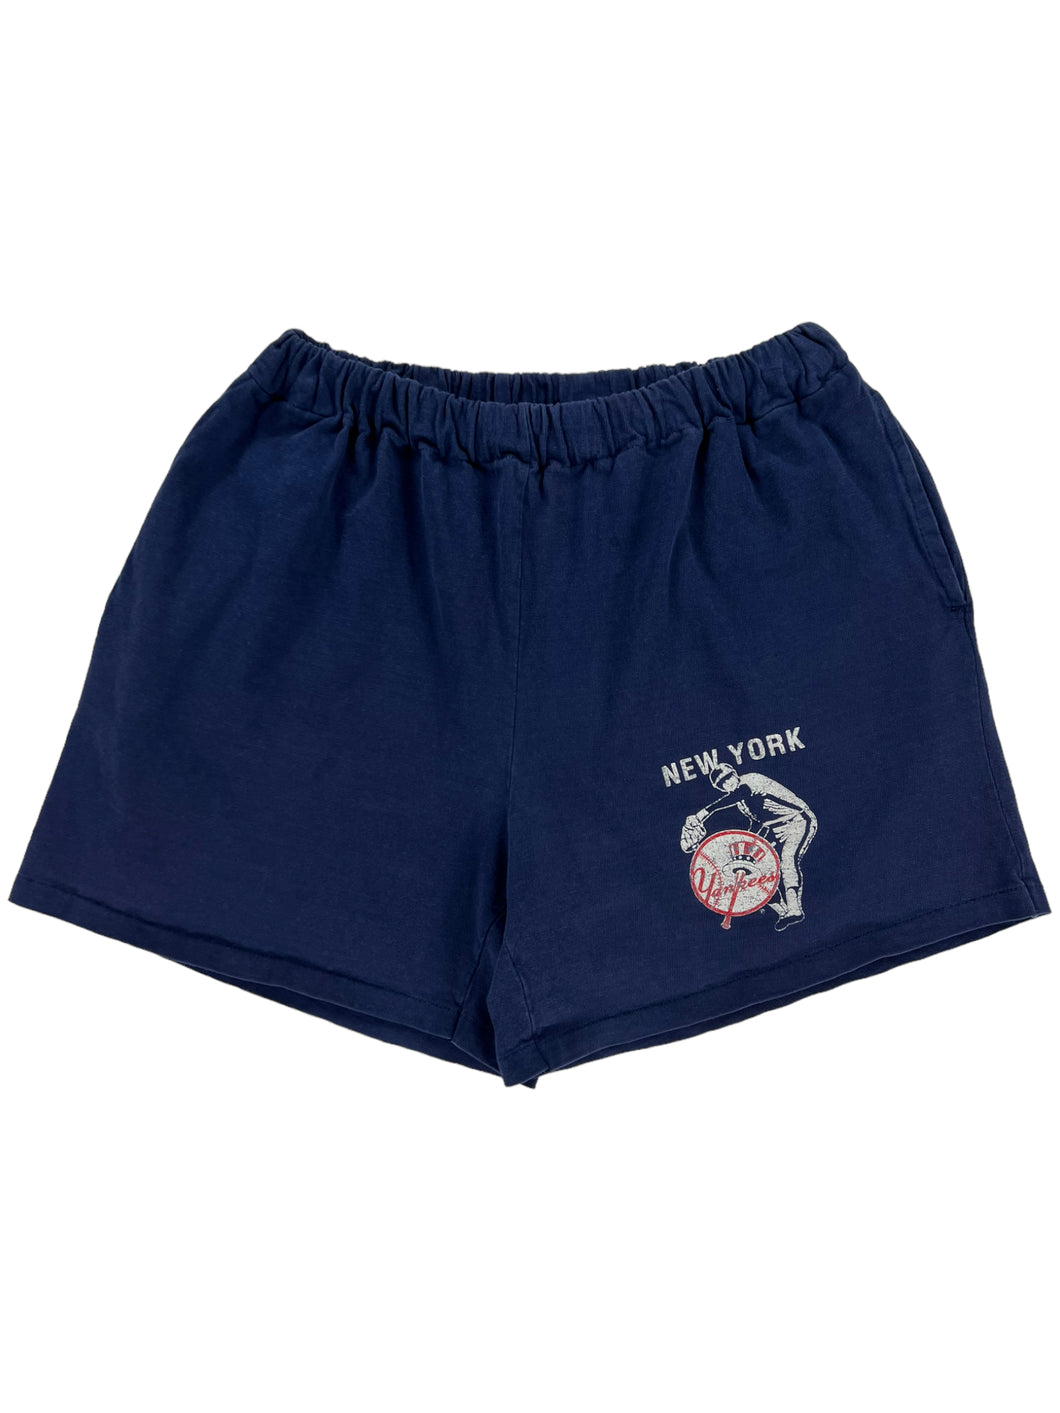 Vintage 90s New York NY Yankees cotton shorts (M/L)